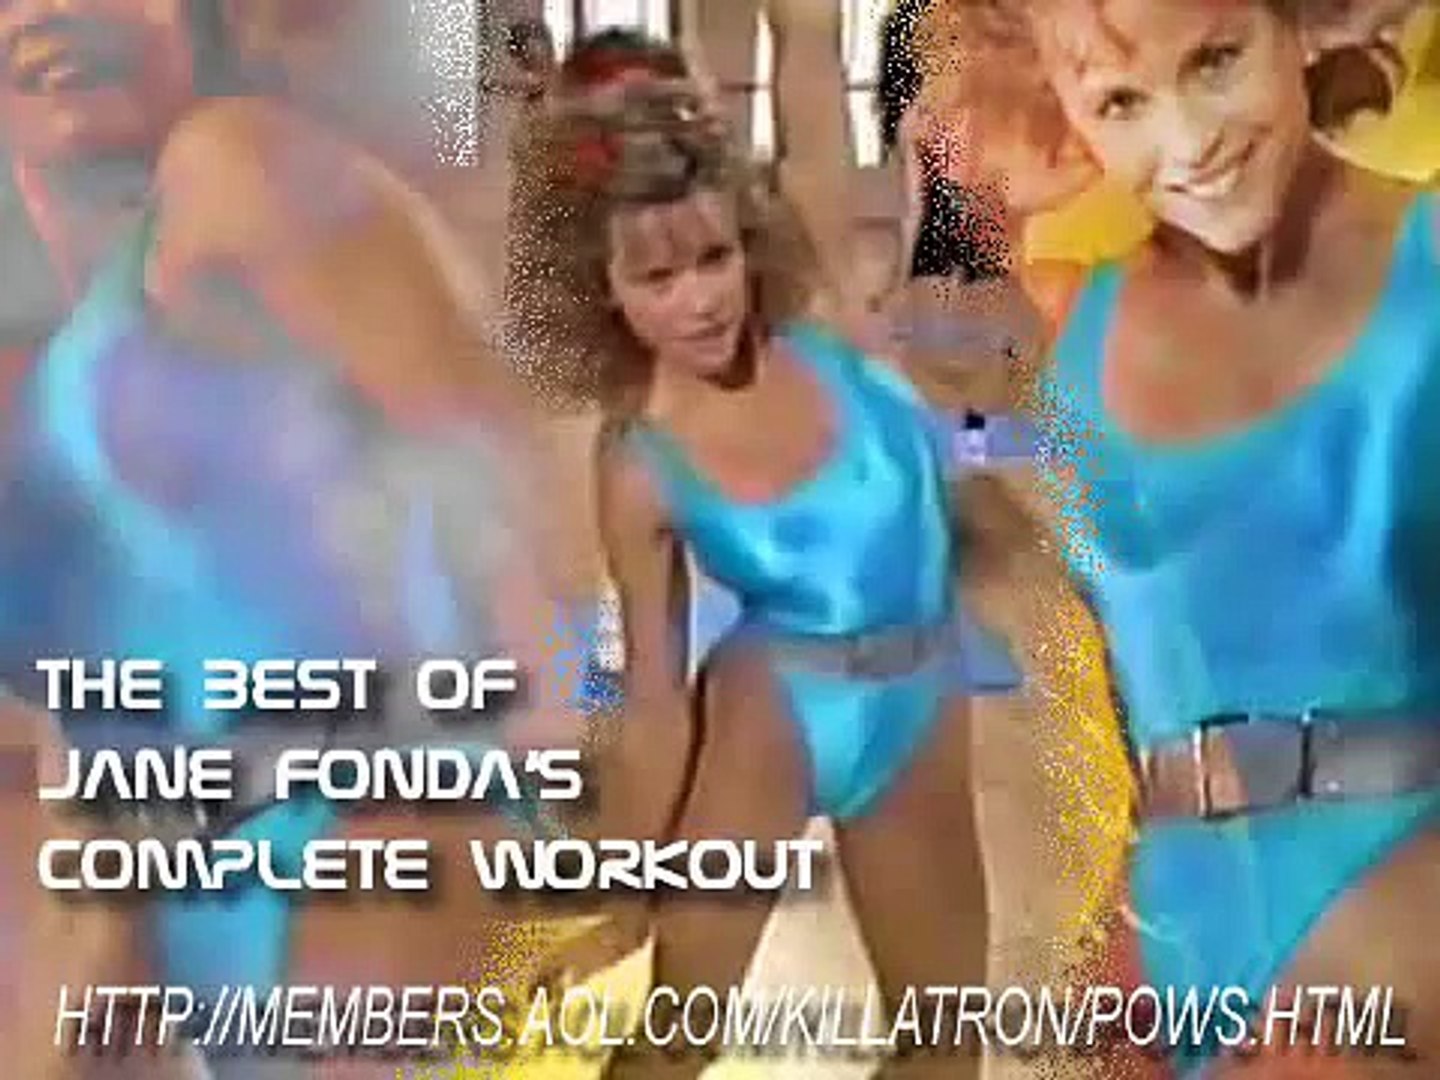  Jane fonda workout download for Workout at Gym